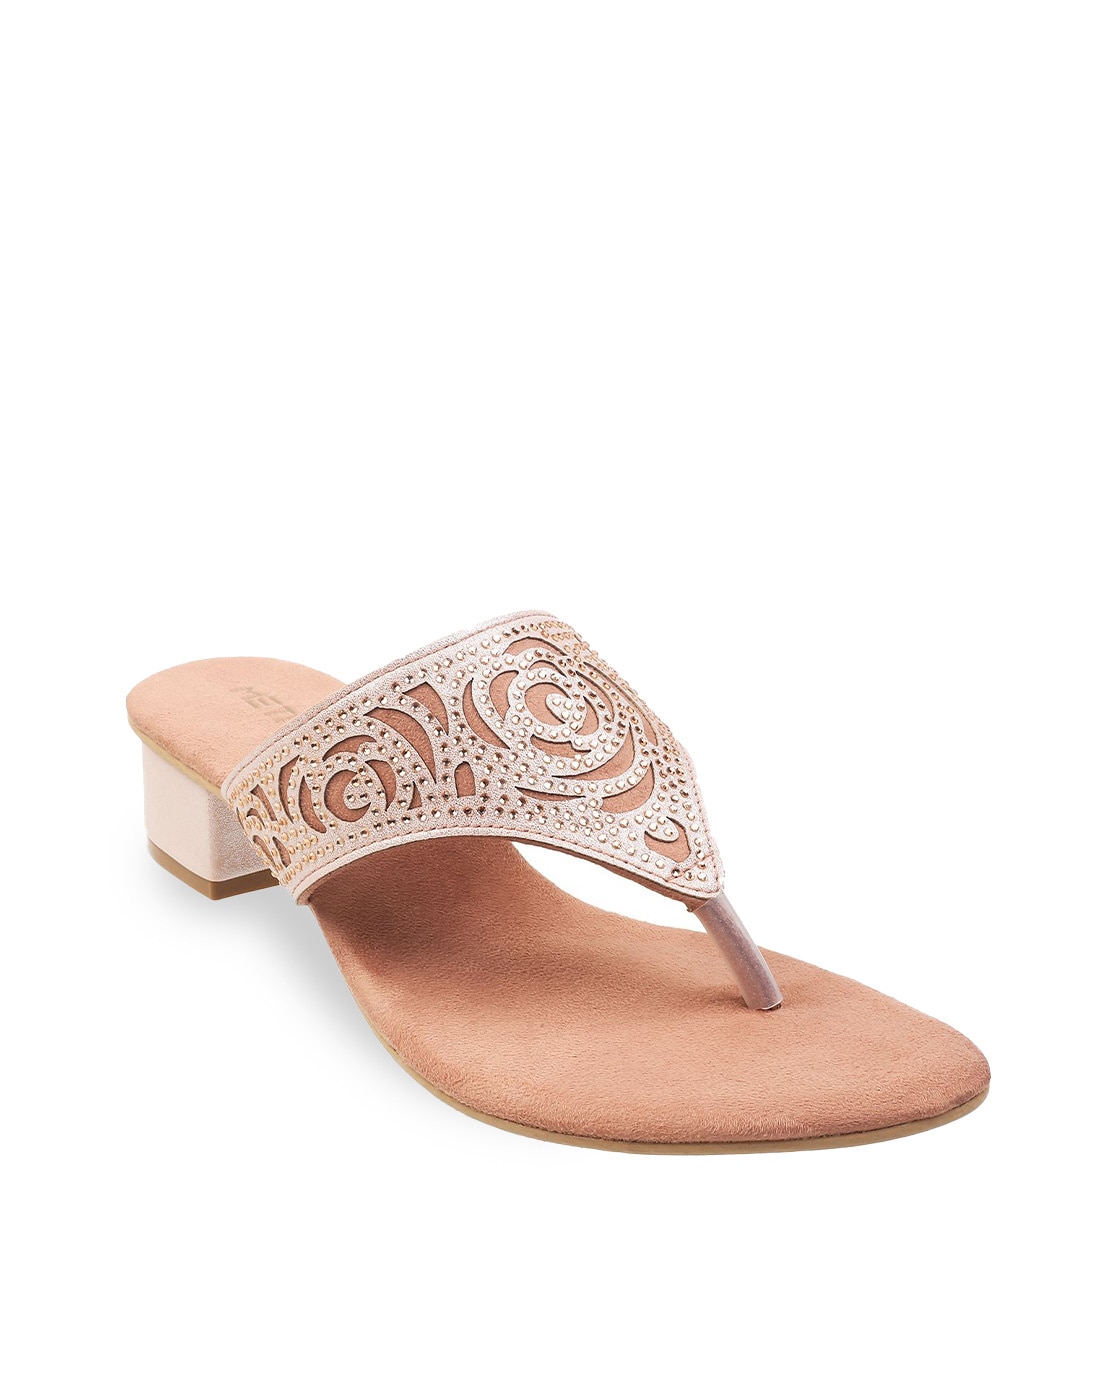 Satin Wedding Flat Sandal with Perla Applique, Wedding Sandals, Gift